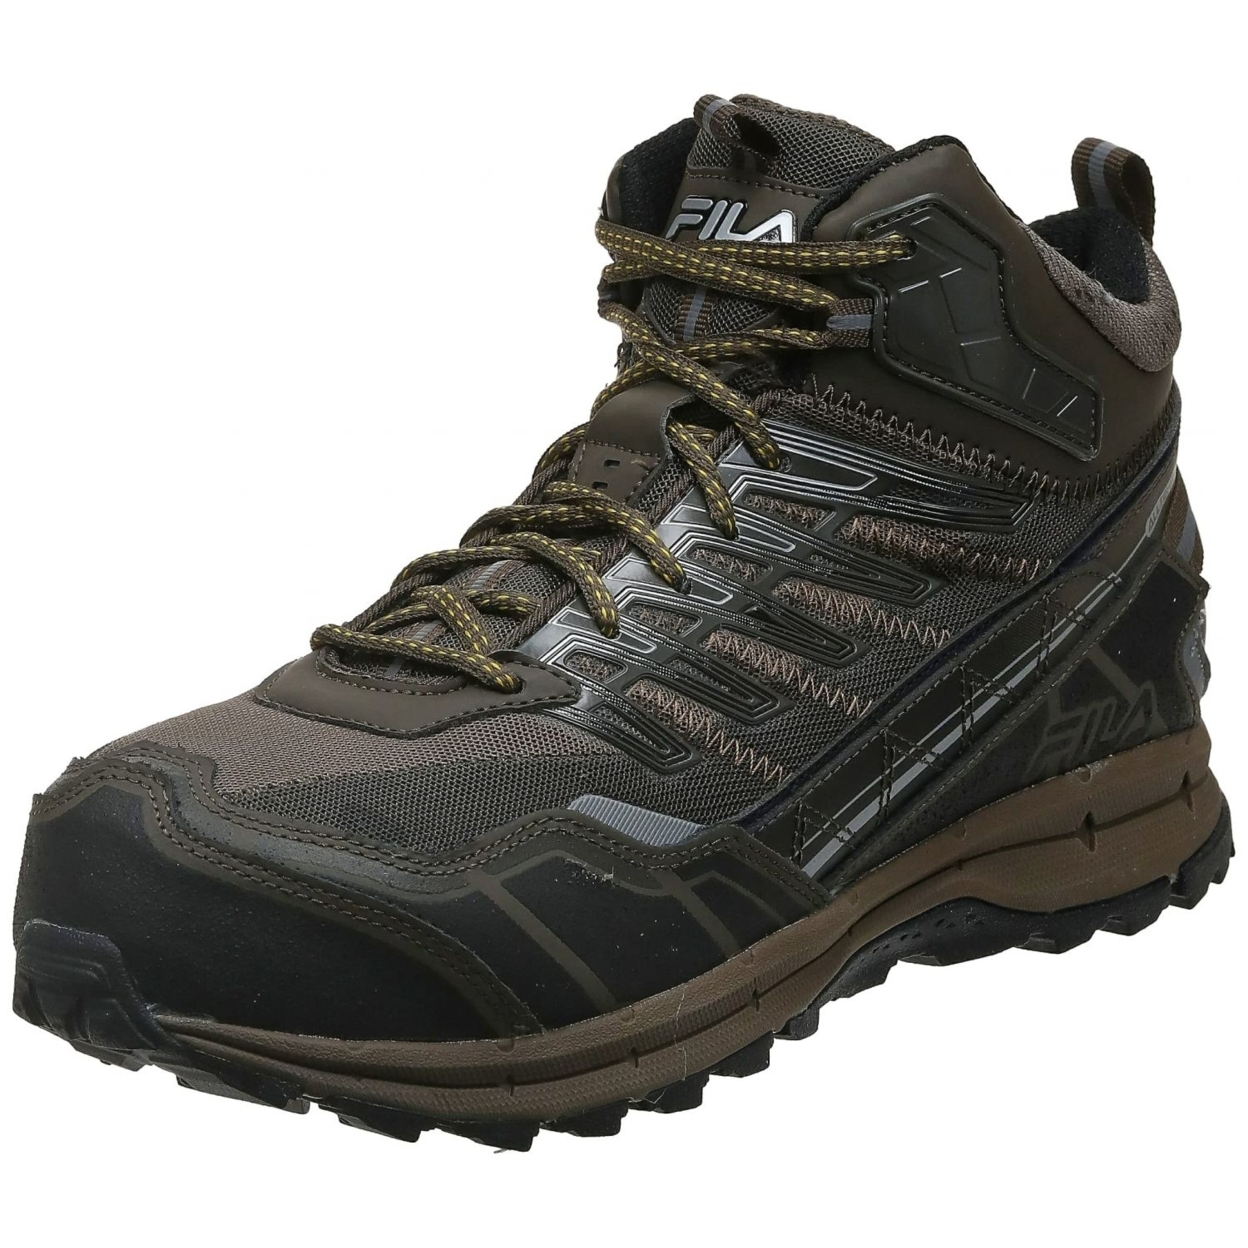 Fila Men's Hail Storm 3 Mid Composite Toe Trail Work Shoes Hiking WNUT/MBRN/GFUS - WNUT/MBRN/GFUS, 9.5